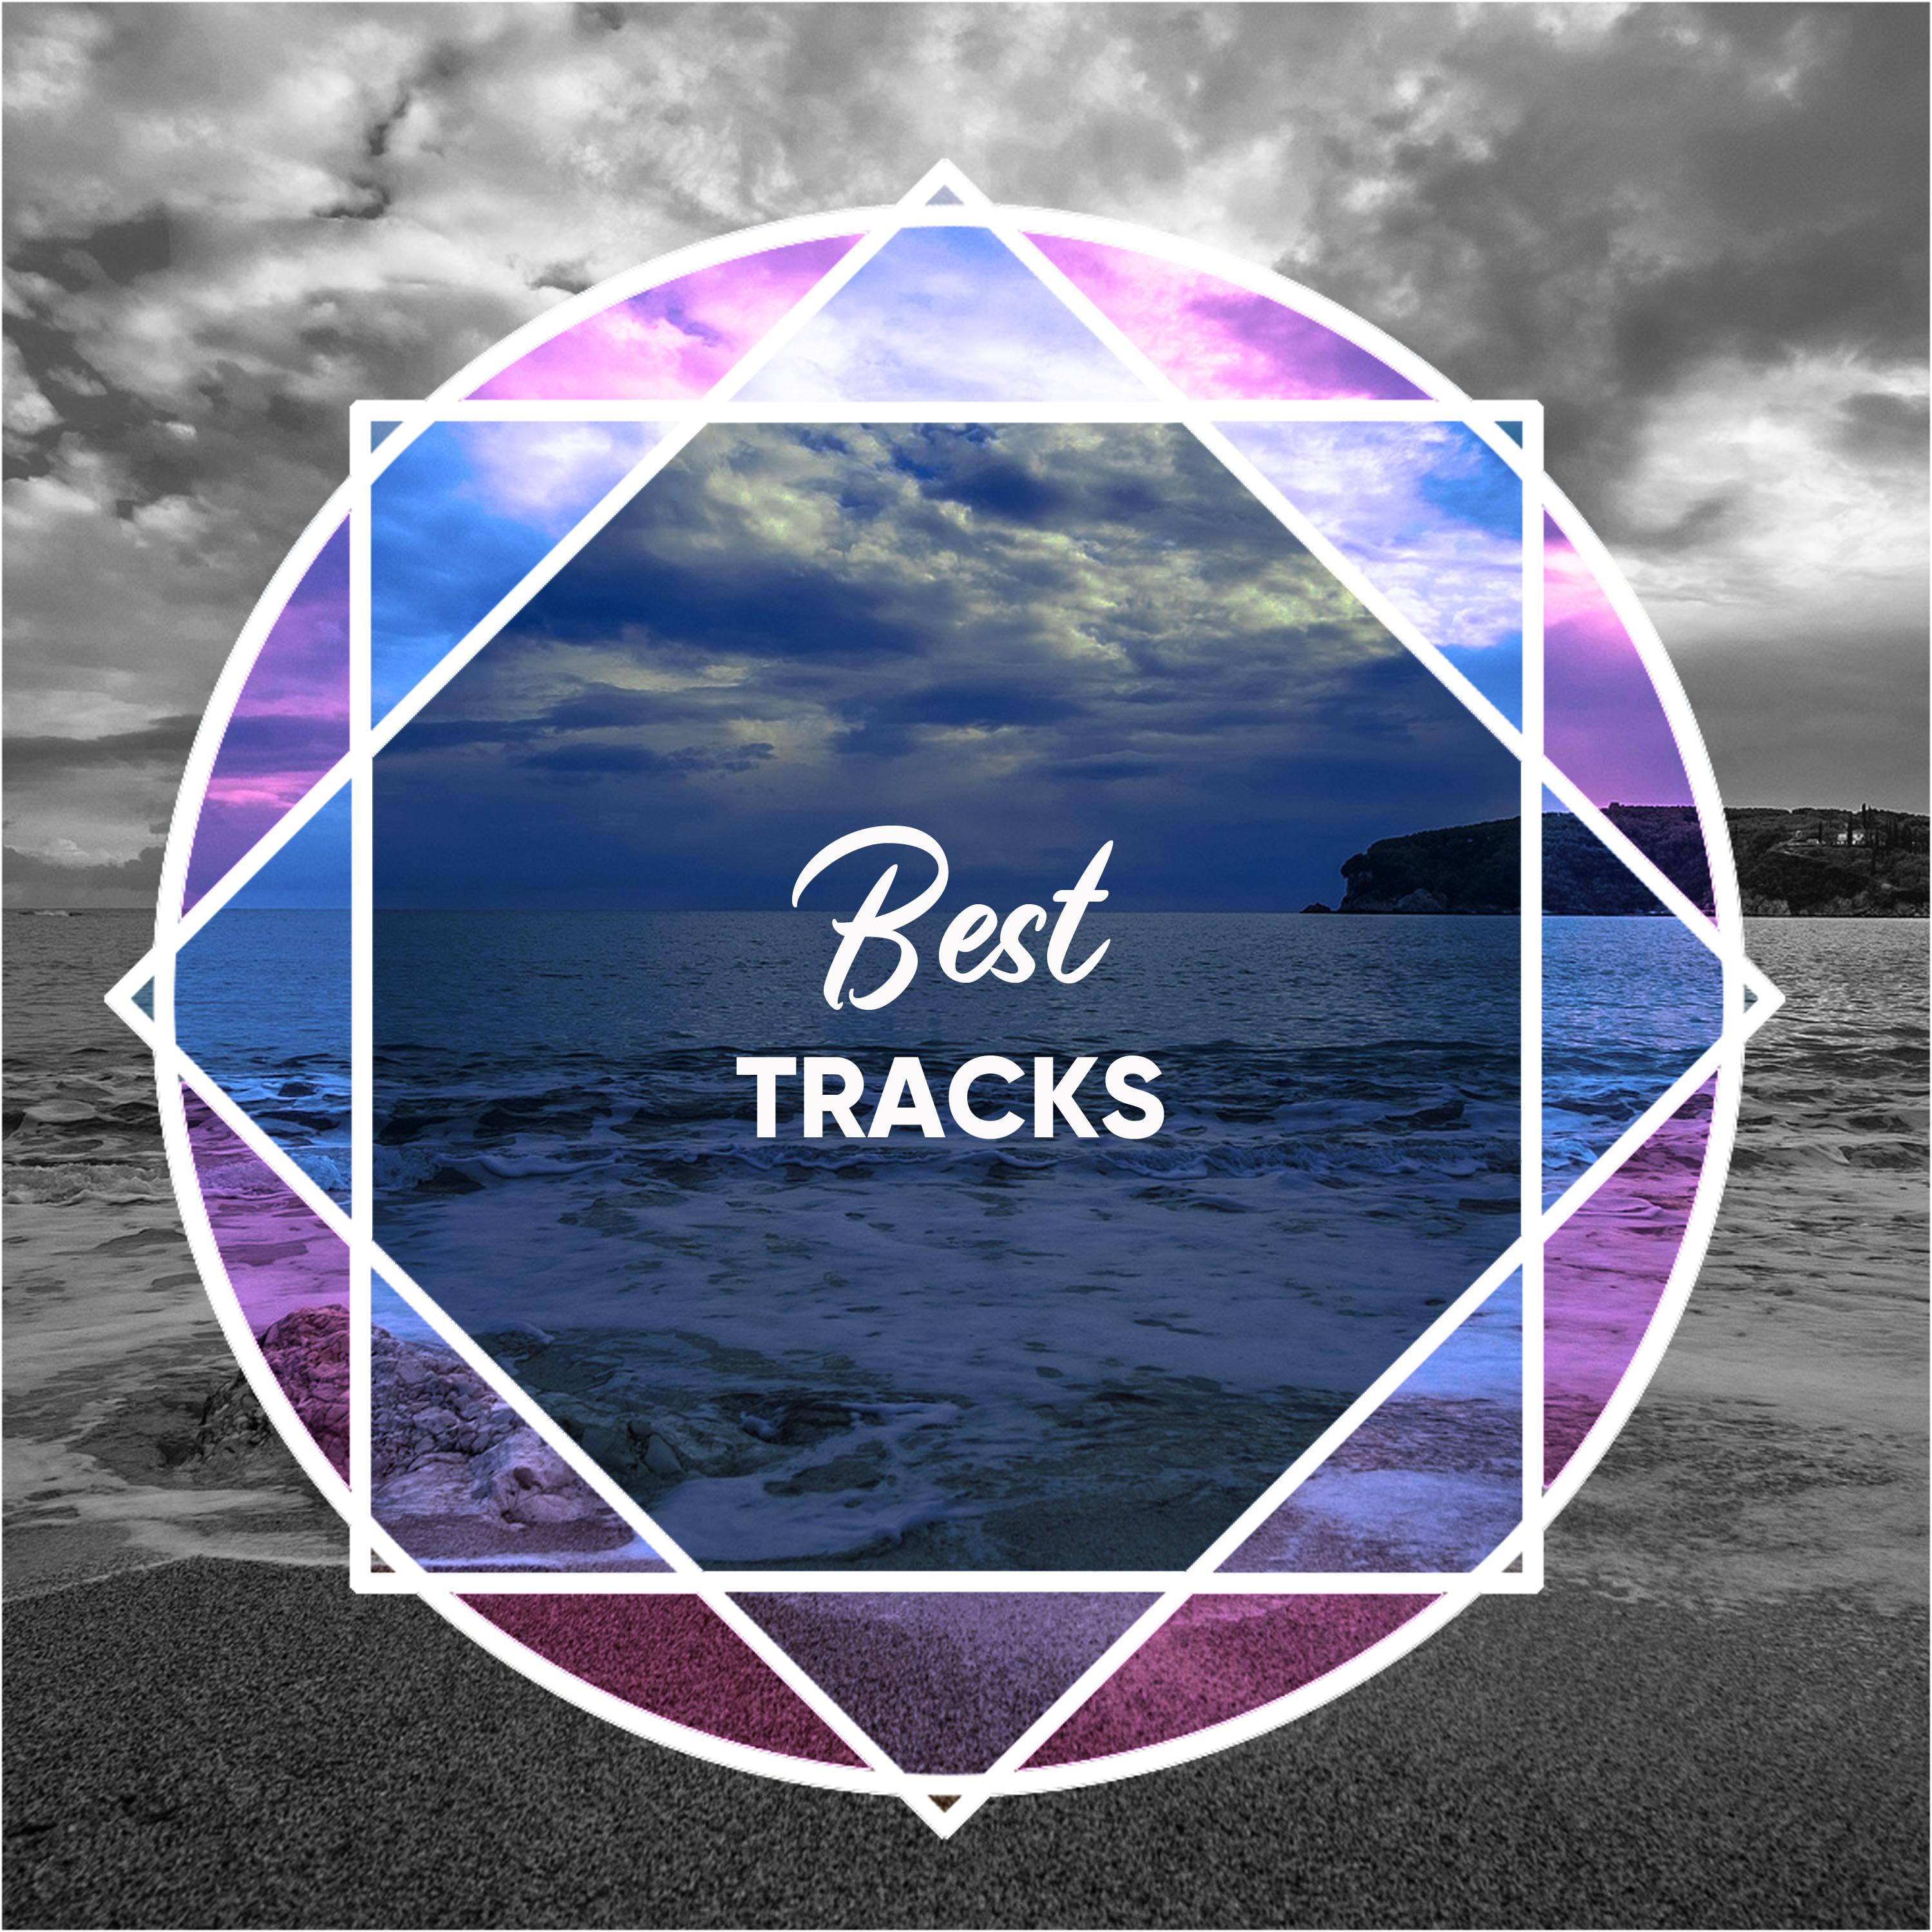 Best Tracks